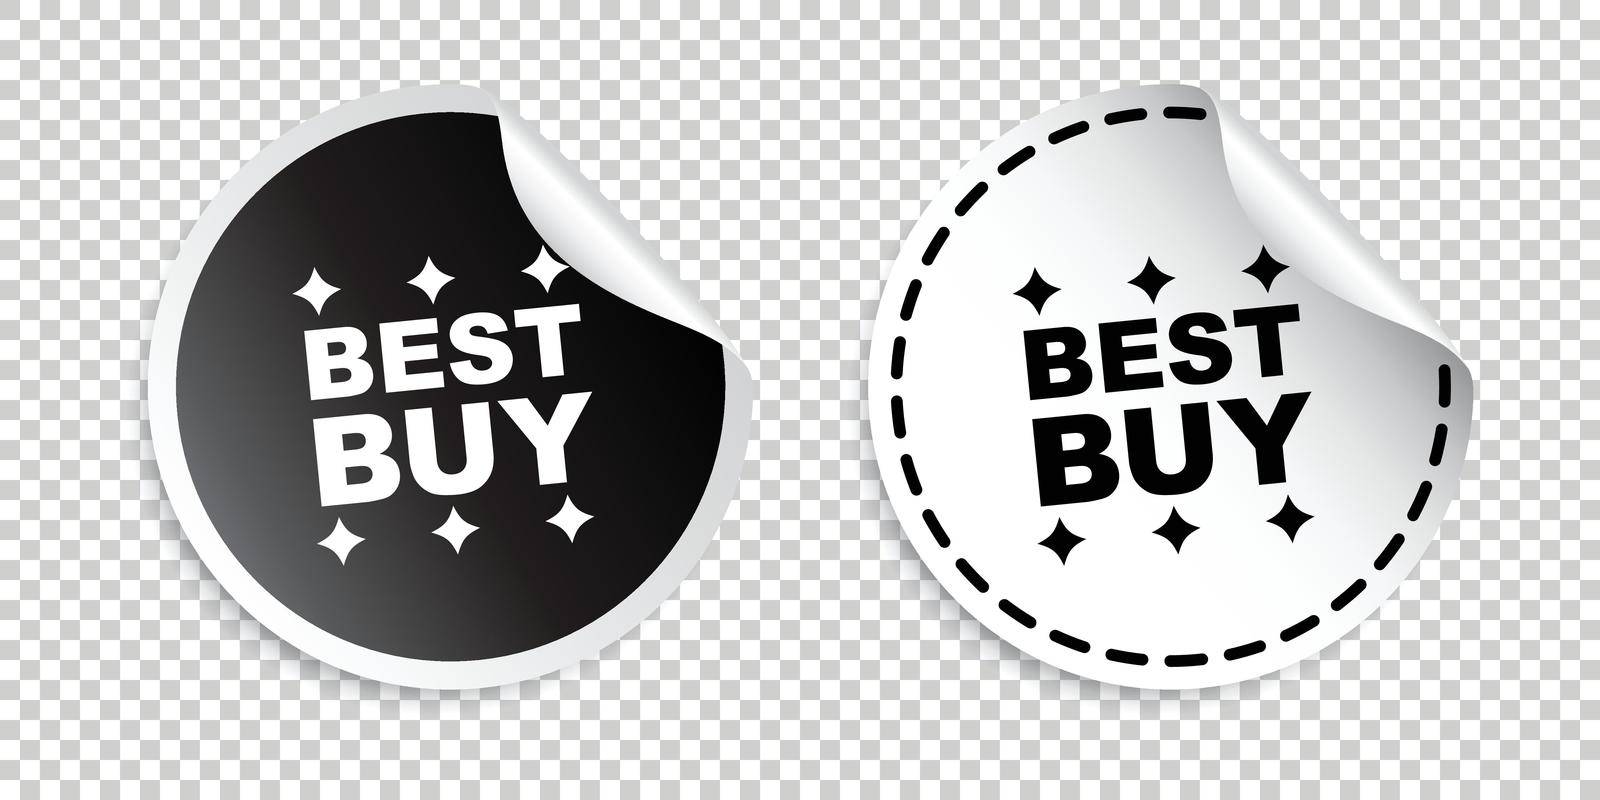 Best buy sticker. Black and white vector illustration. by LysenkoA